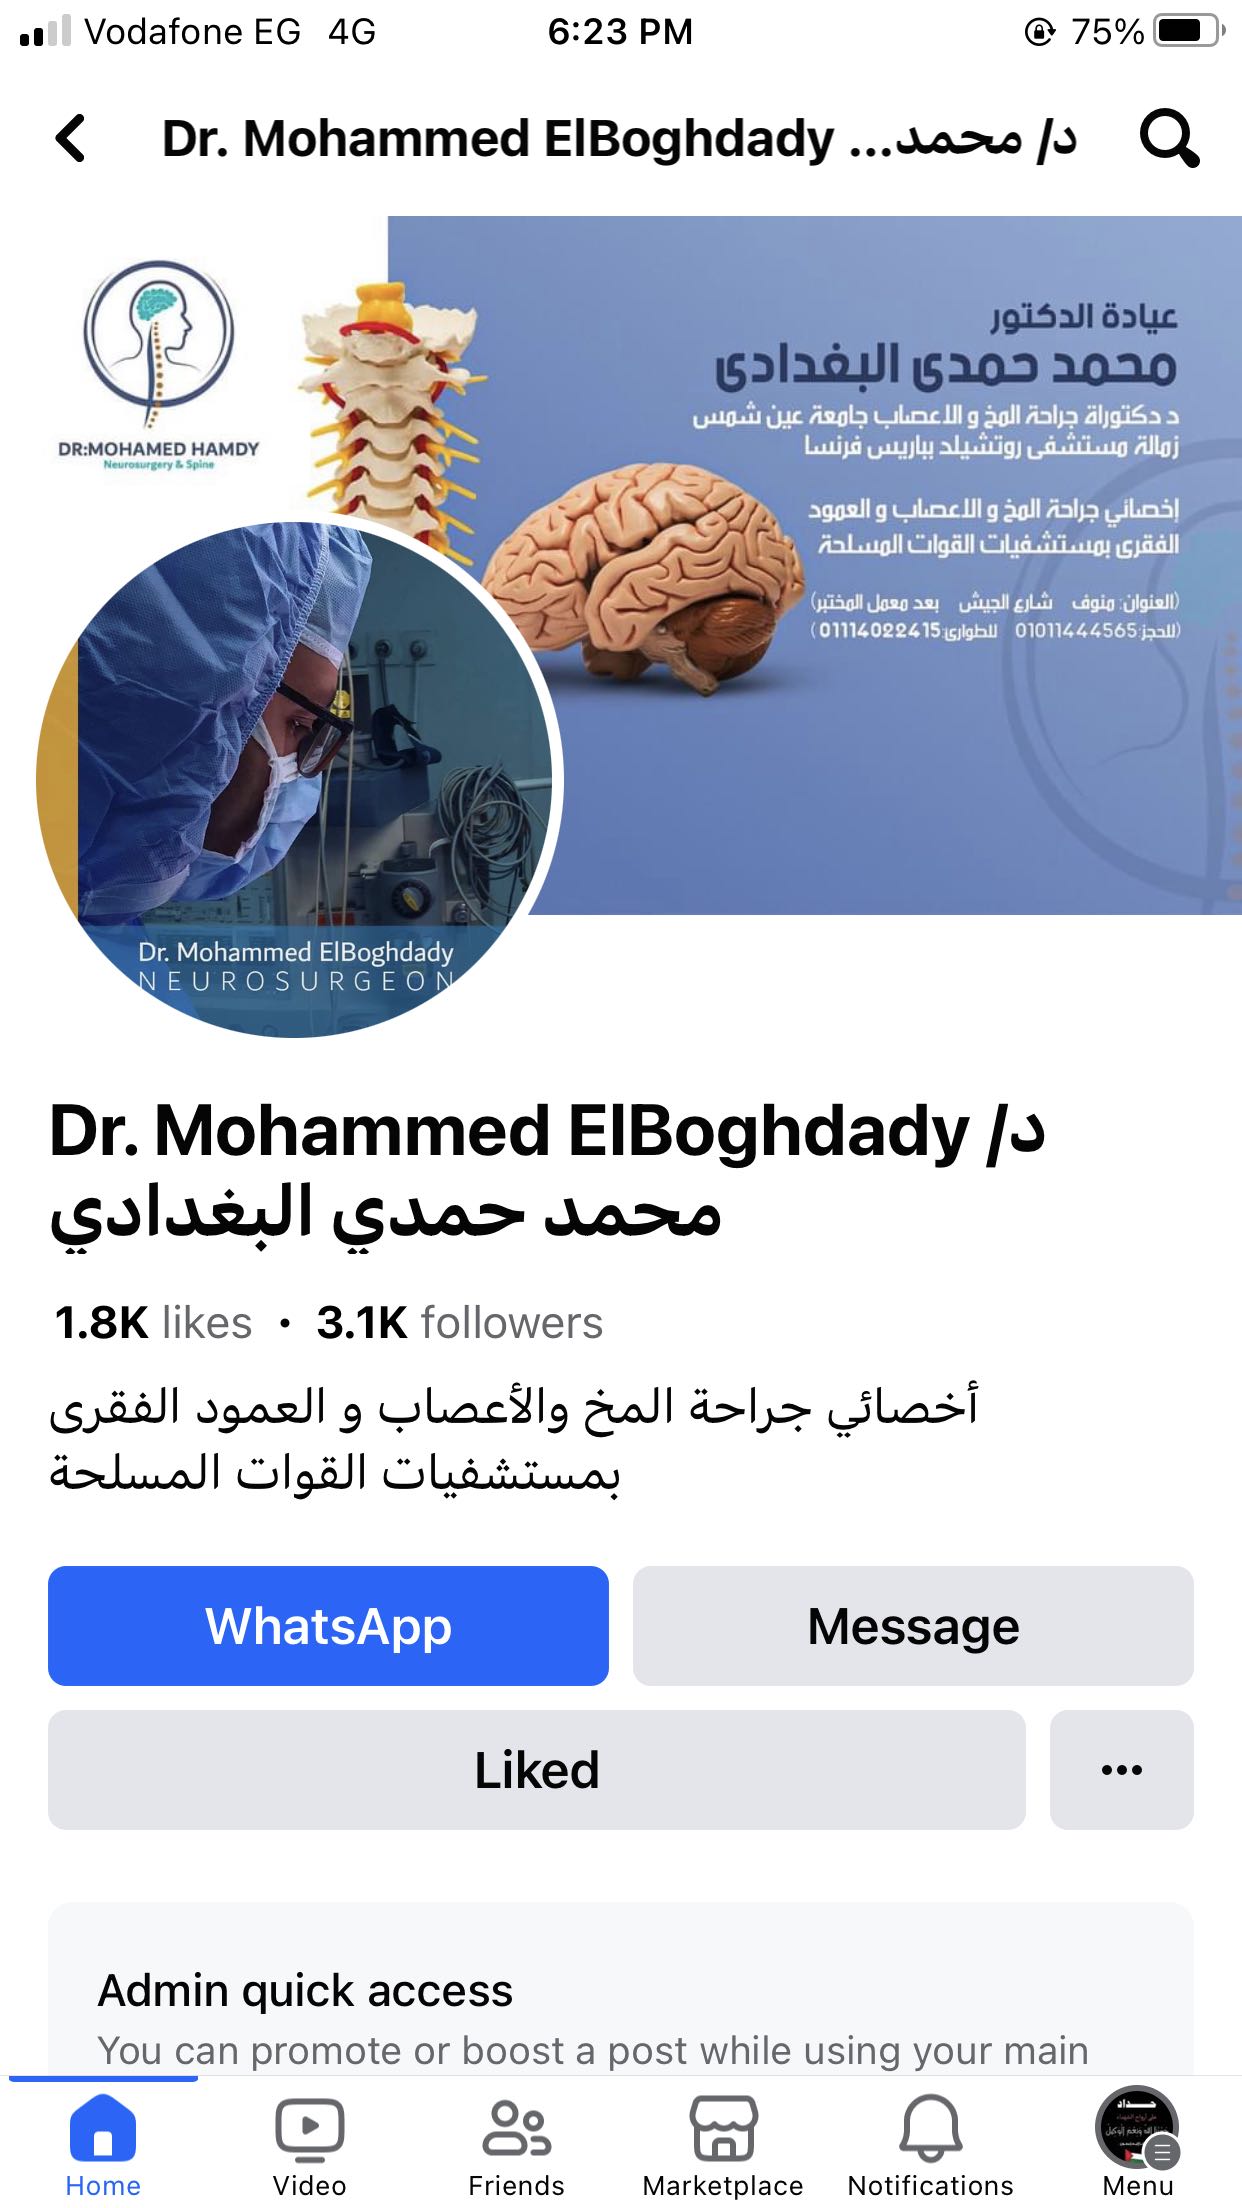 Dr. Mohammed El Boghdady